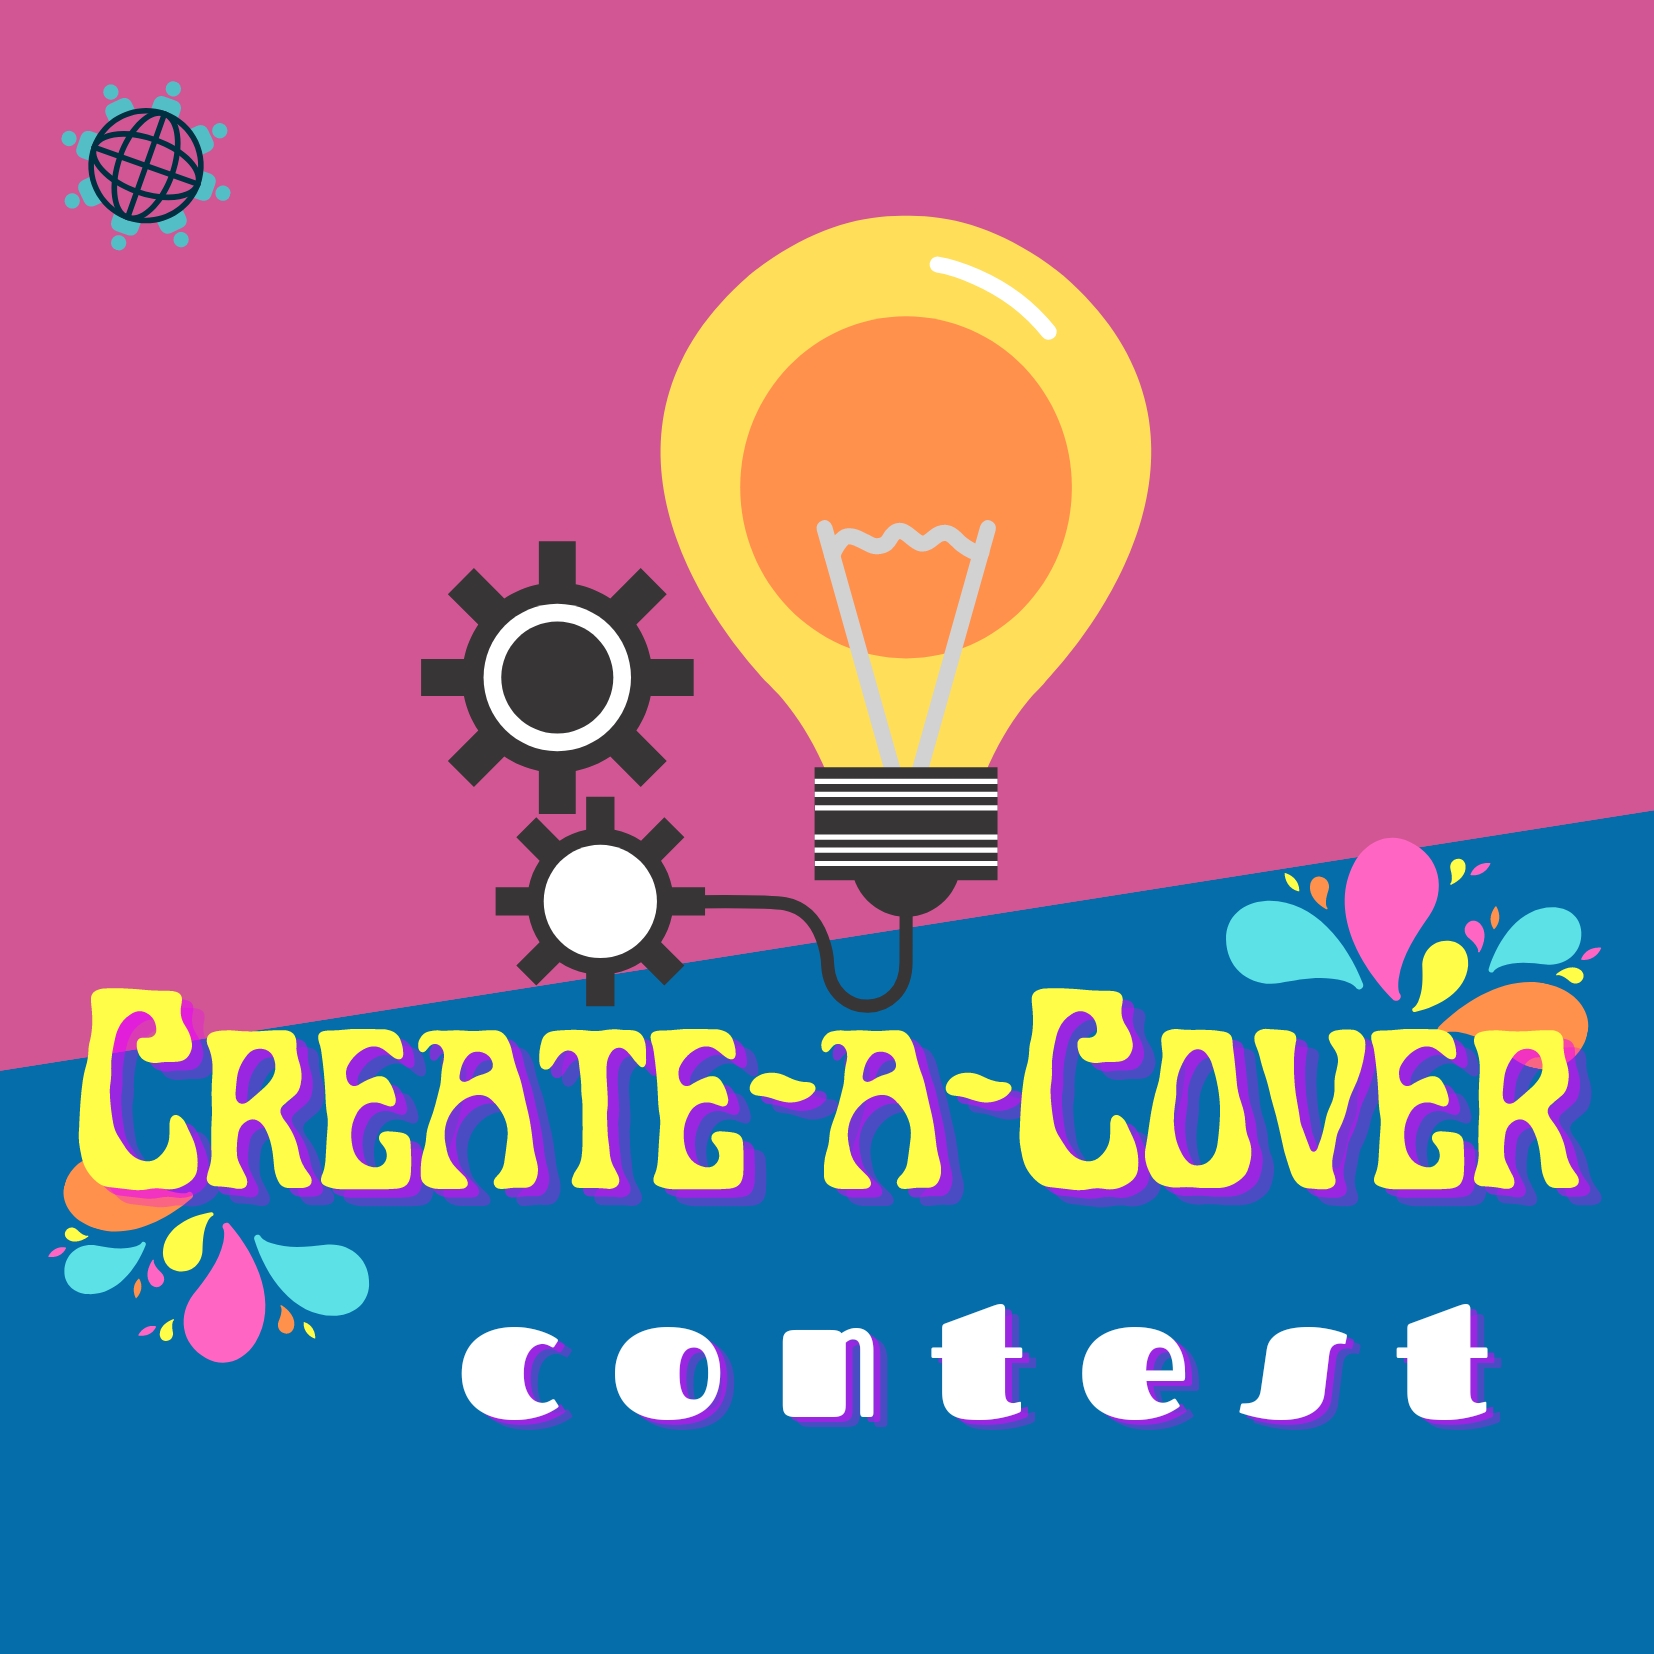 Create-a-Cover Contest 2.0!